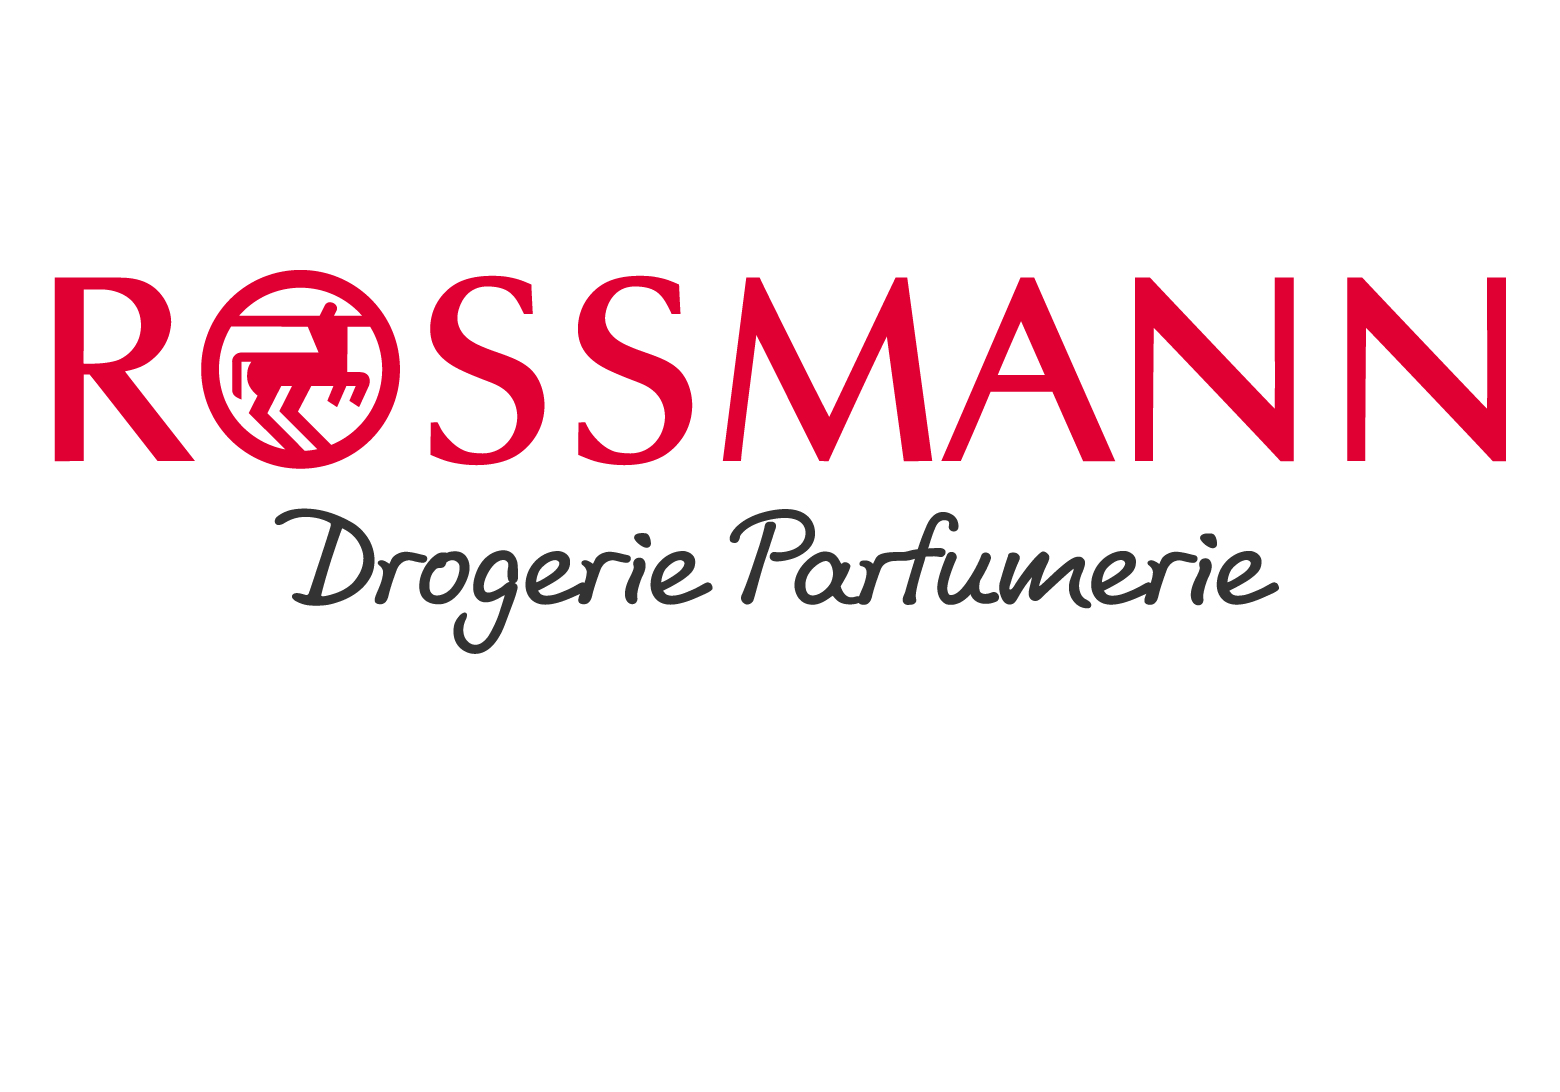 Logo_ROSSMANN_drogerie_parfumerie_jpg.jpg